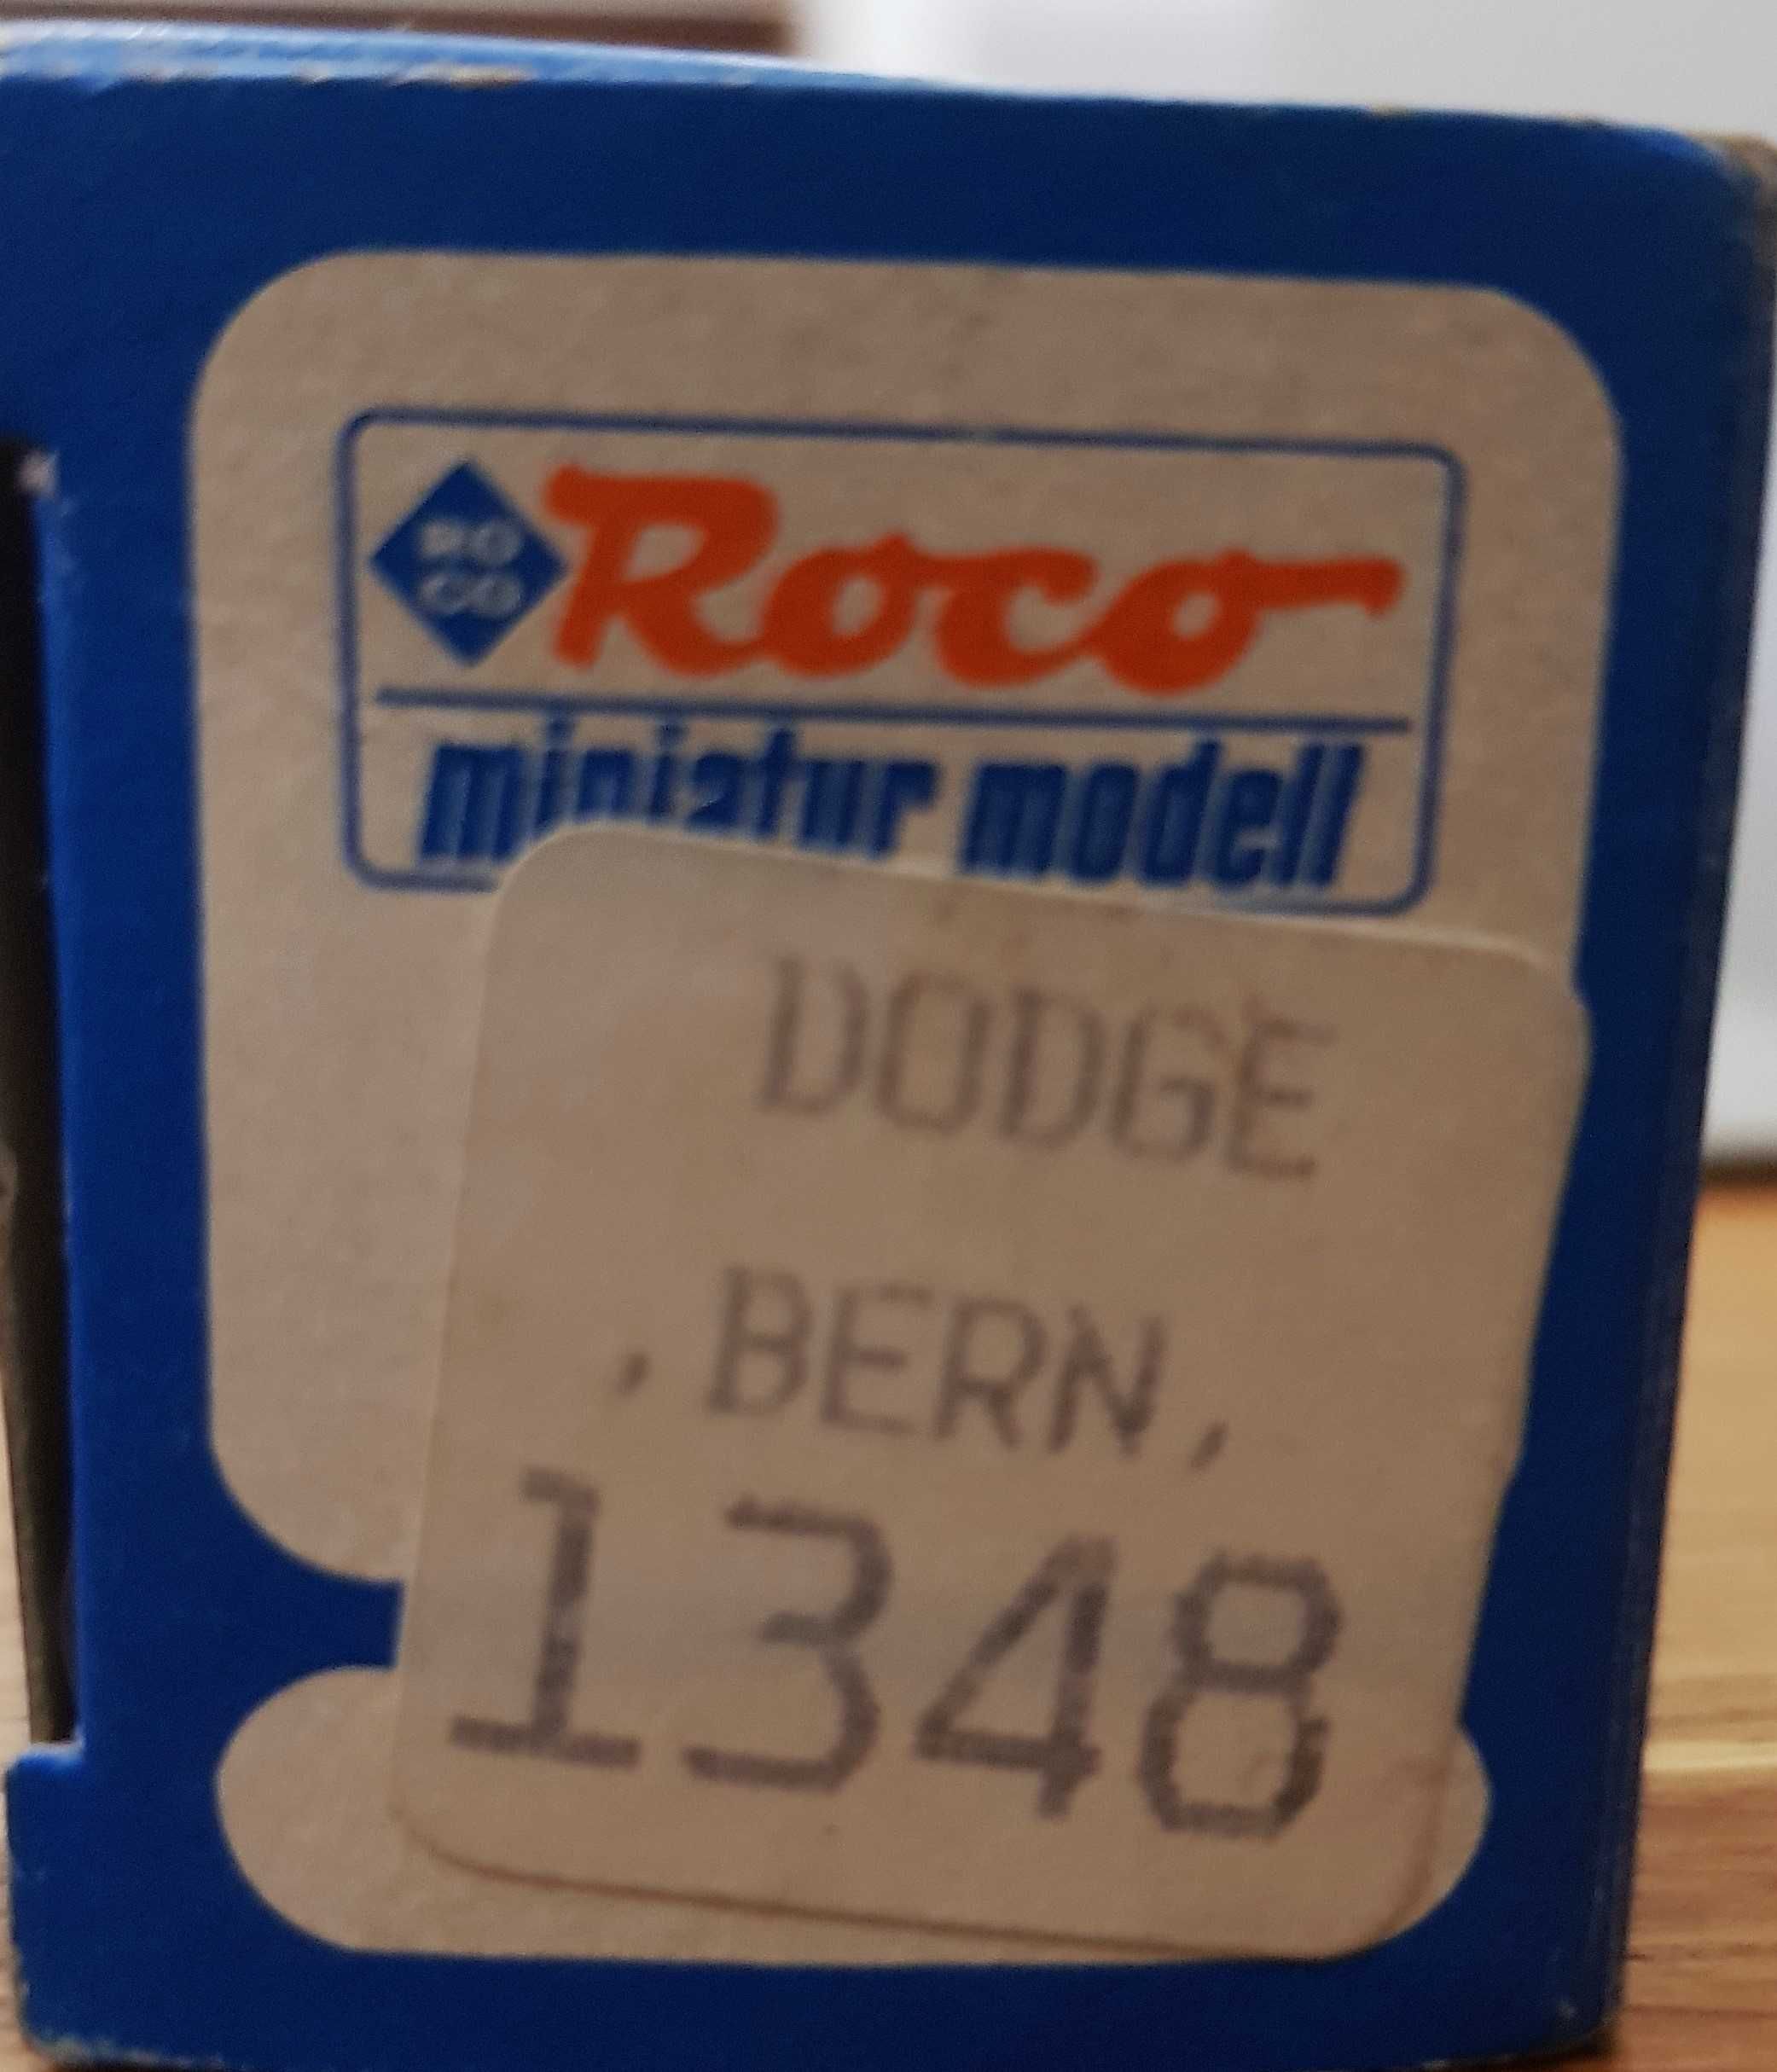 Model Dodge Bern. Roco 1348 skala 1:87 HO